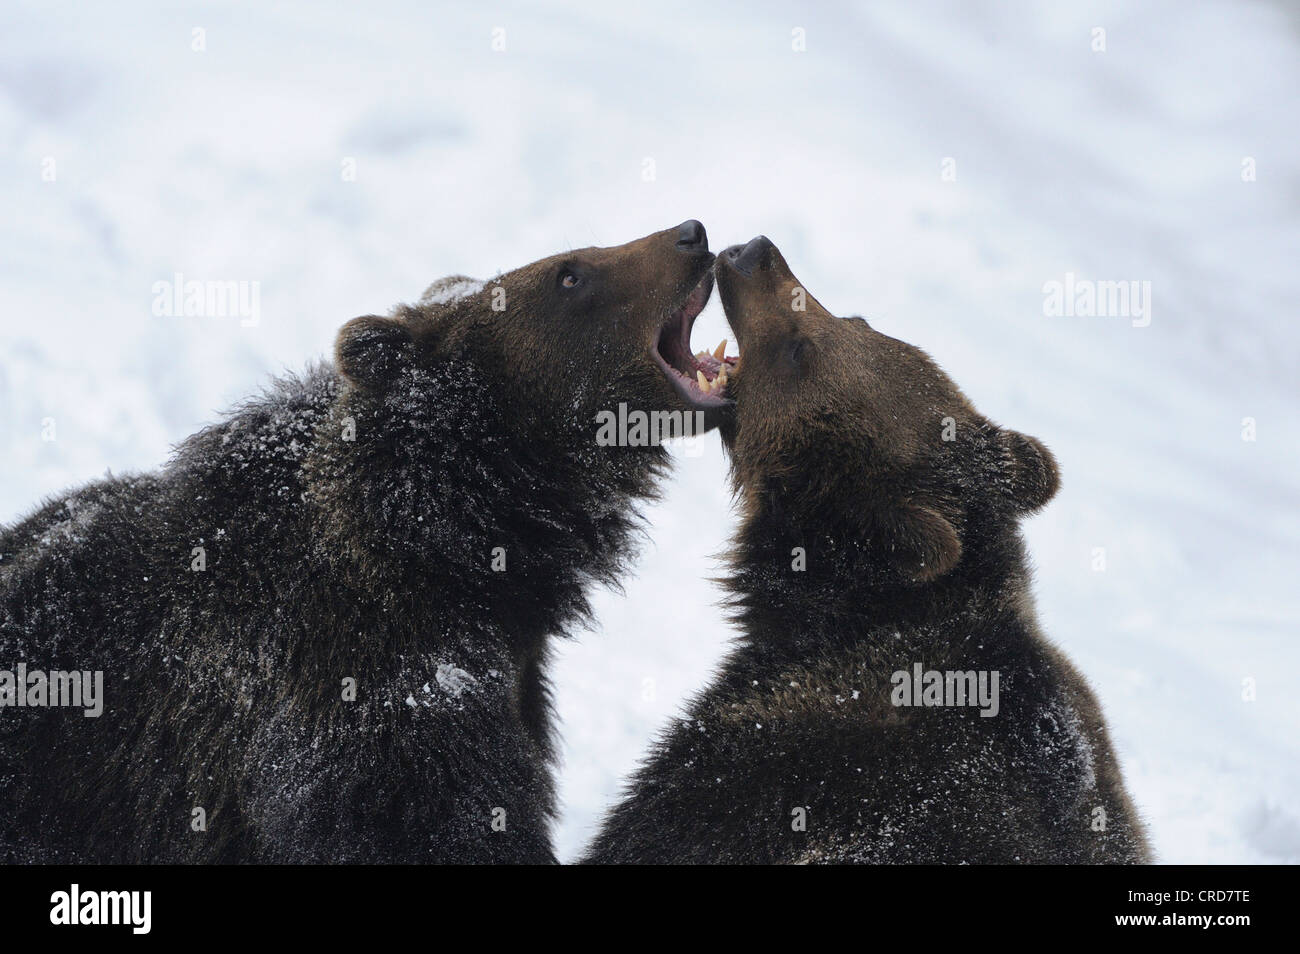 Two European brown bears (Ursus arctos arctos) in snow Stock Photo